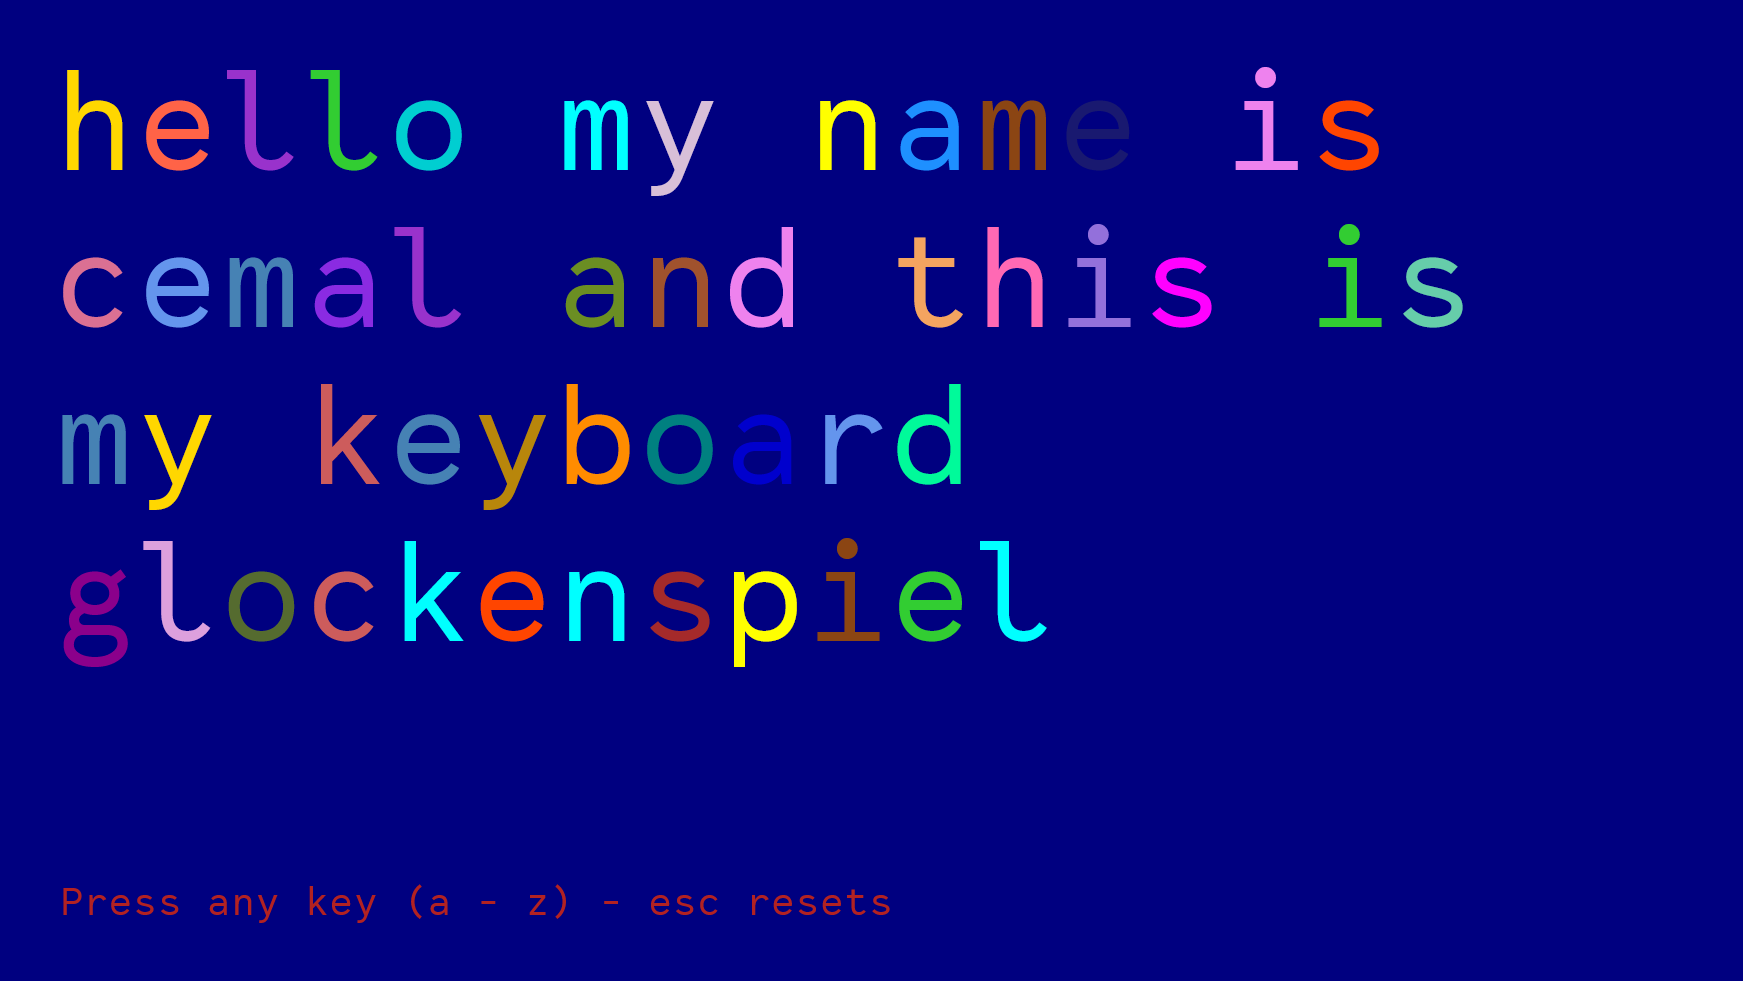 Keyboard glockenspiel with blue background